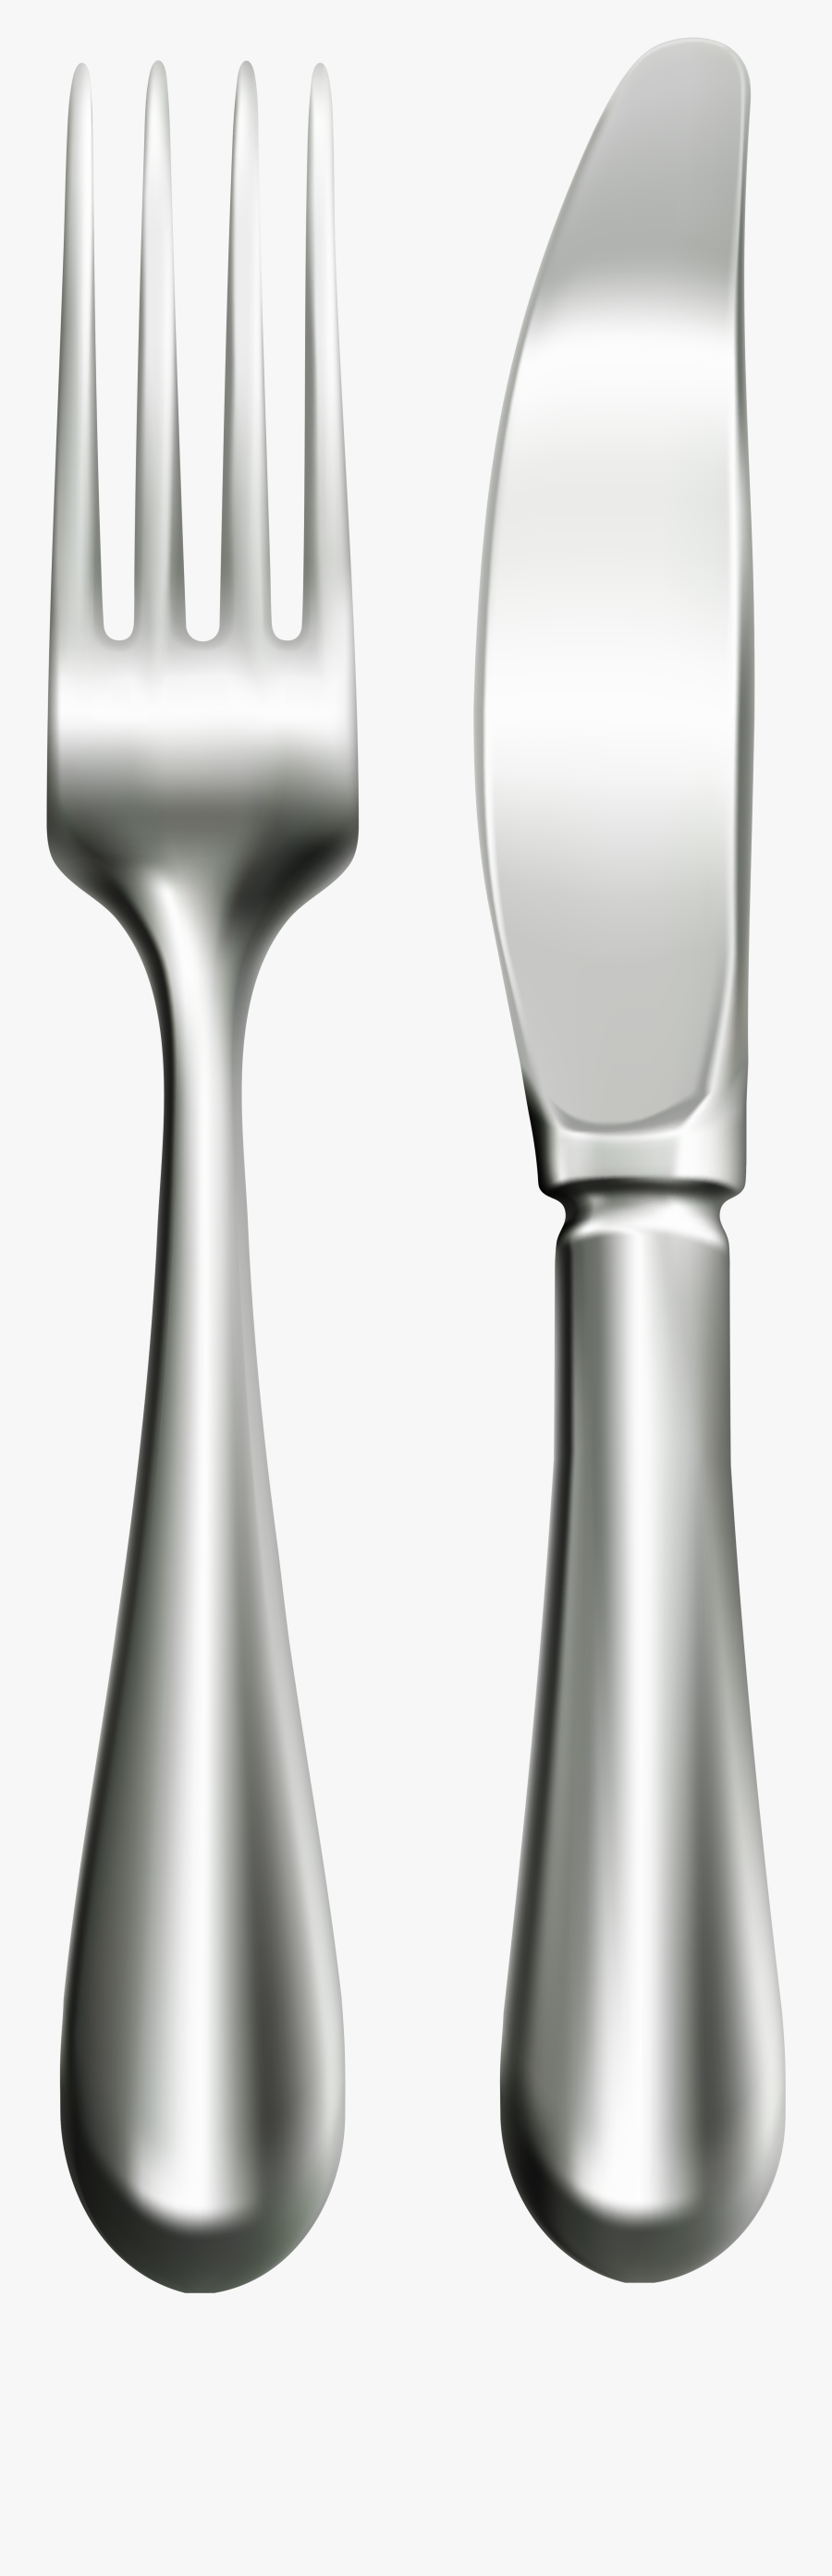 Fork And Knife Png Clip Art - Clip Art Knife And Fork, Transparent Clipart